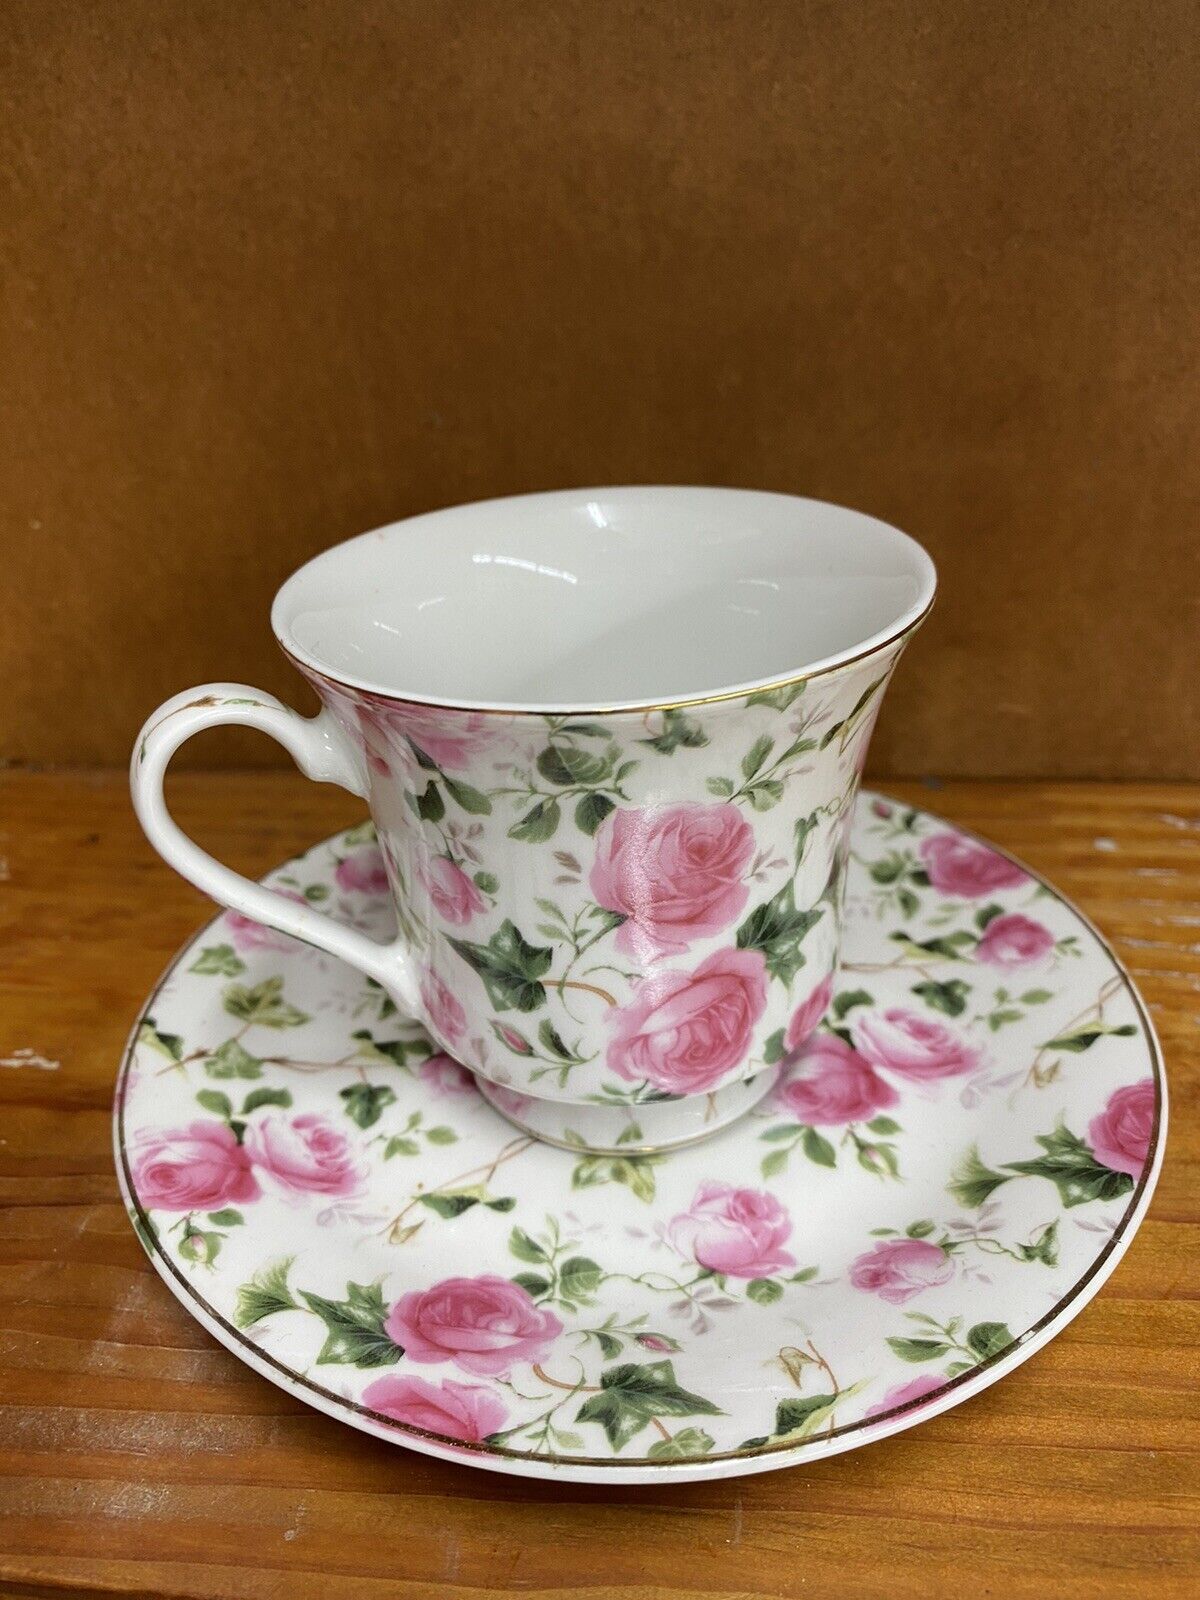 Darice Floral Teacup With Saucer